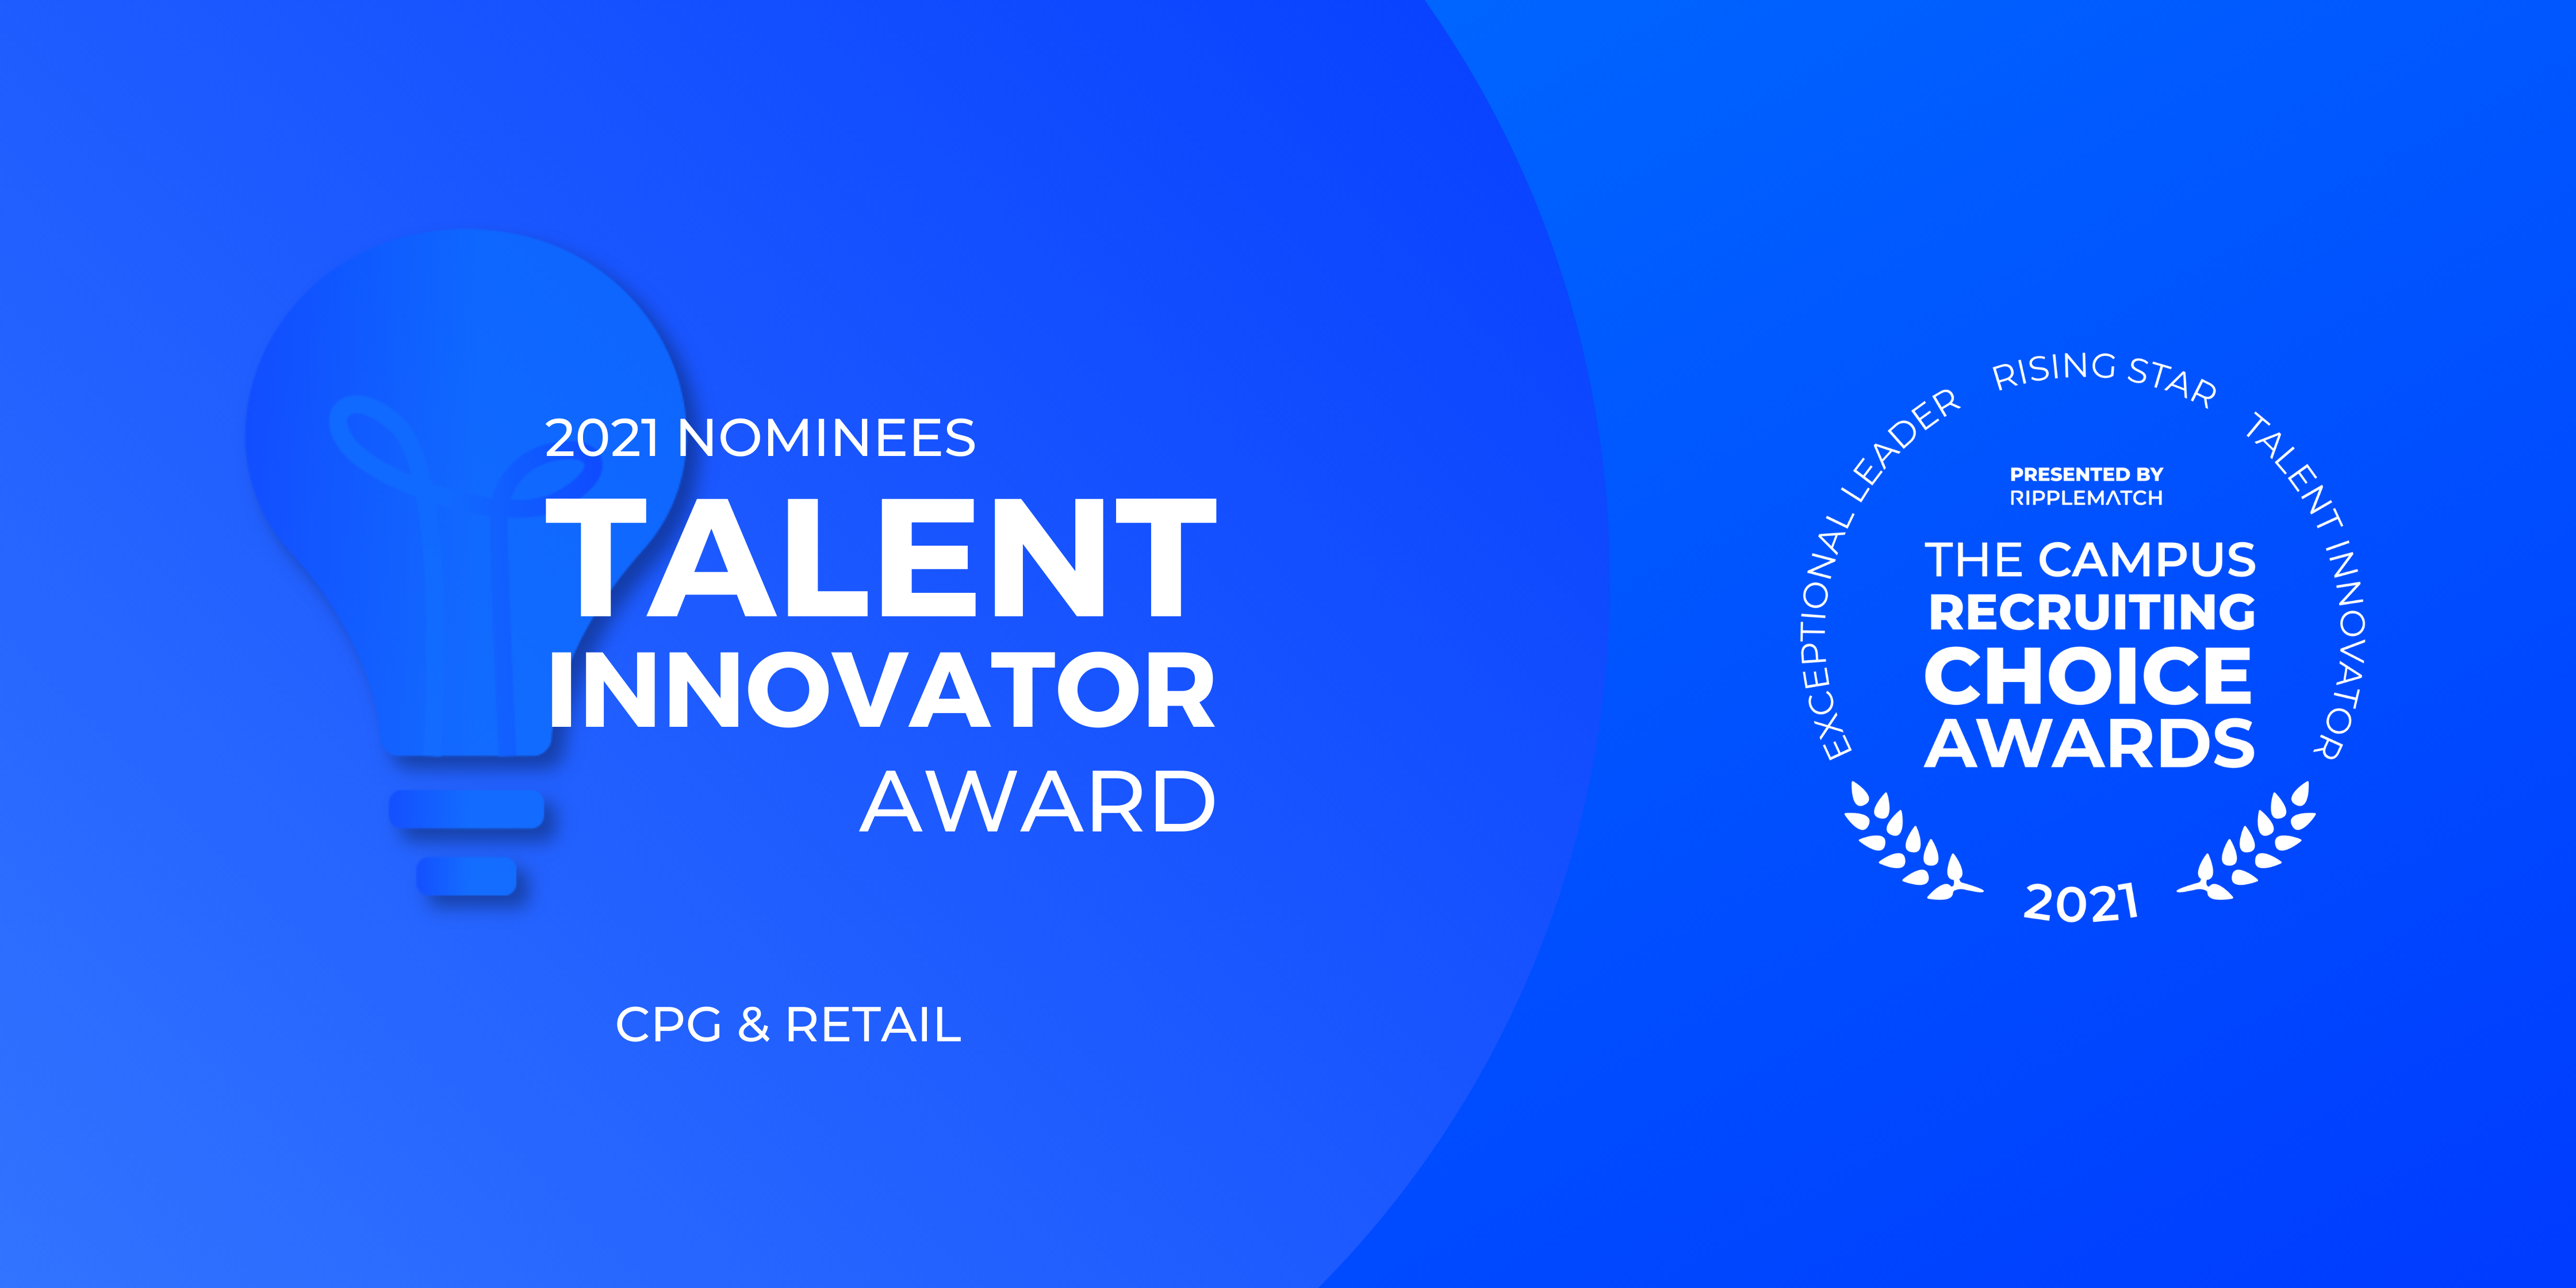 Talent Innovator Award - CPG & Retail